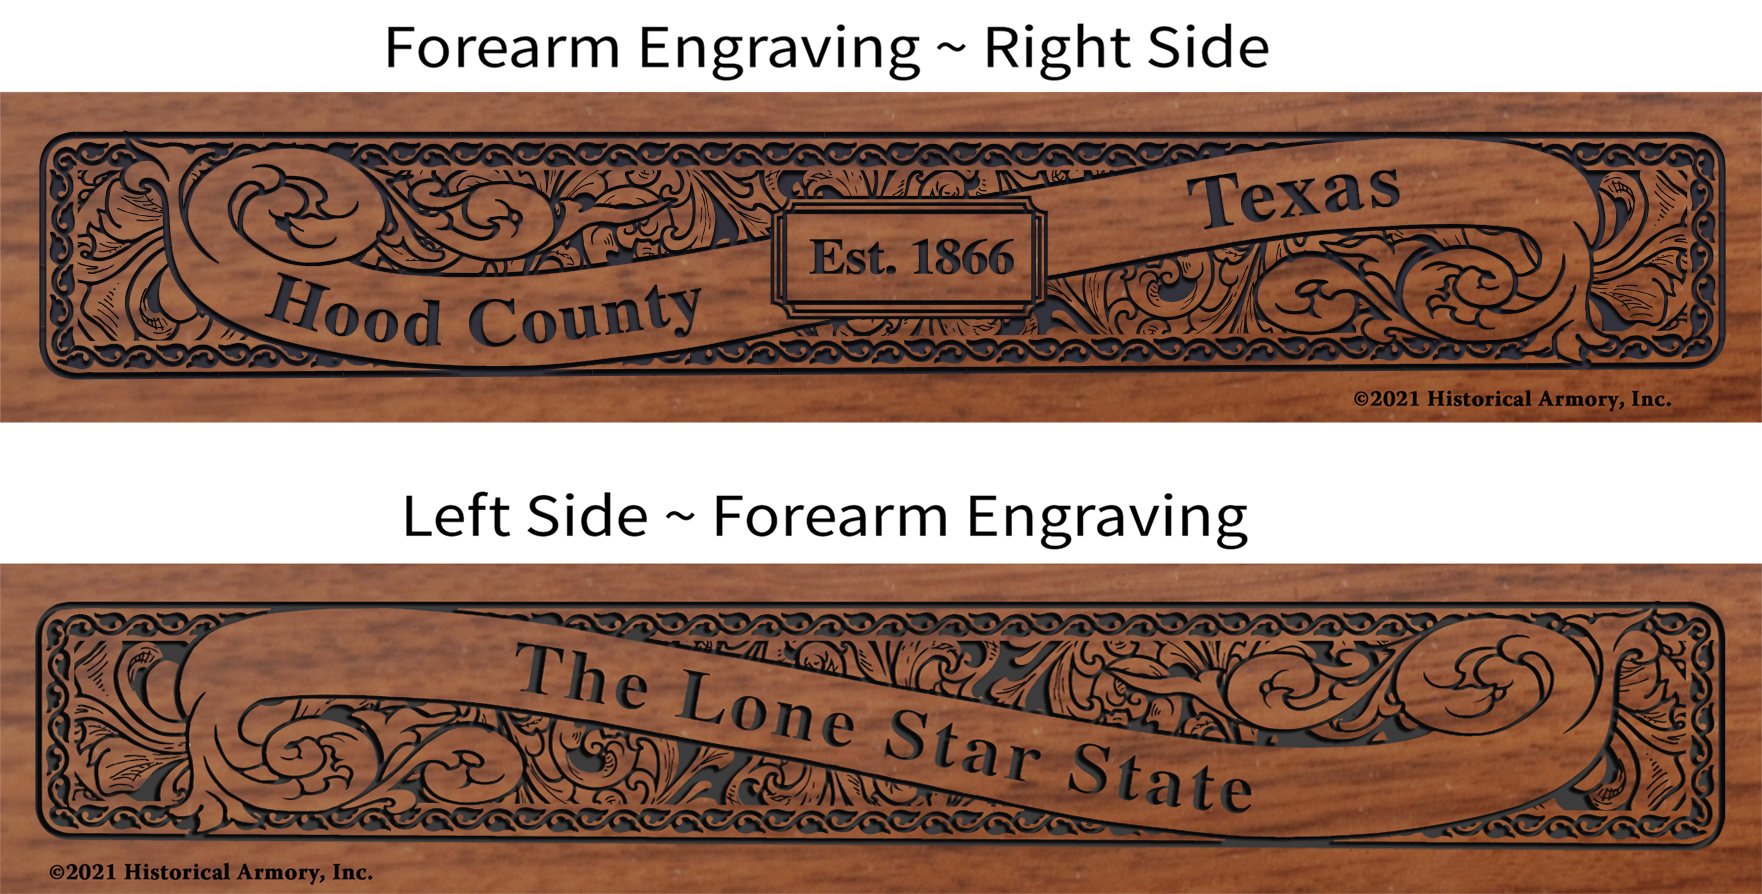 Hood County Texas Establishment and Motto History Engraved Rifle Forearm